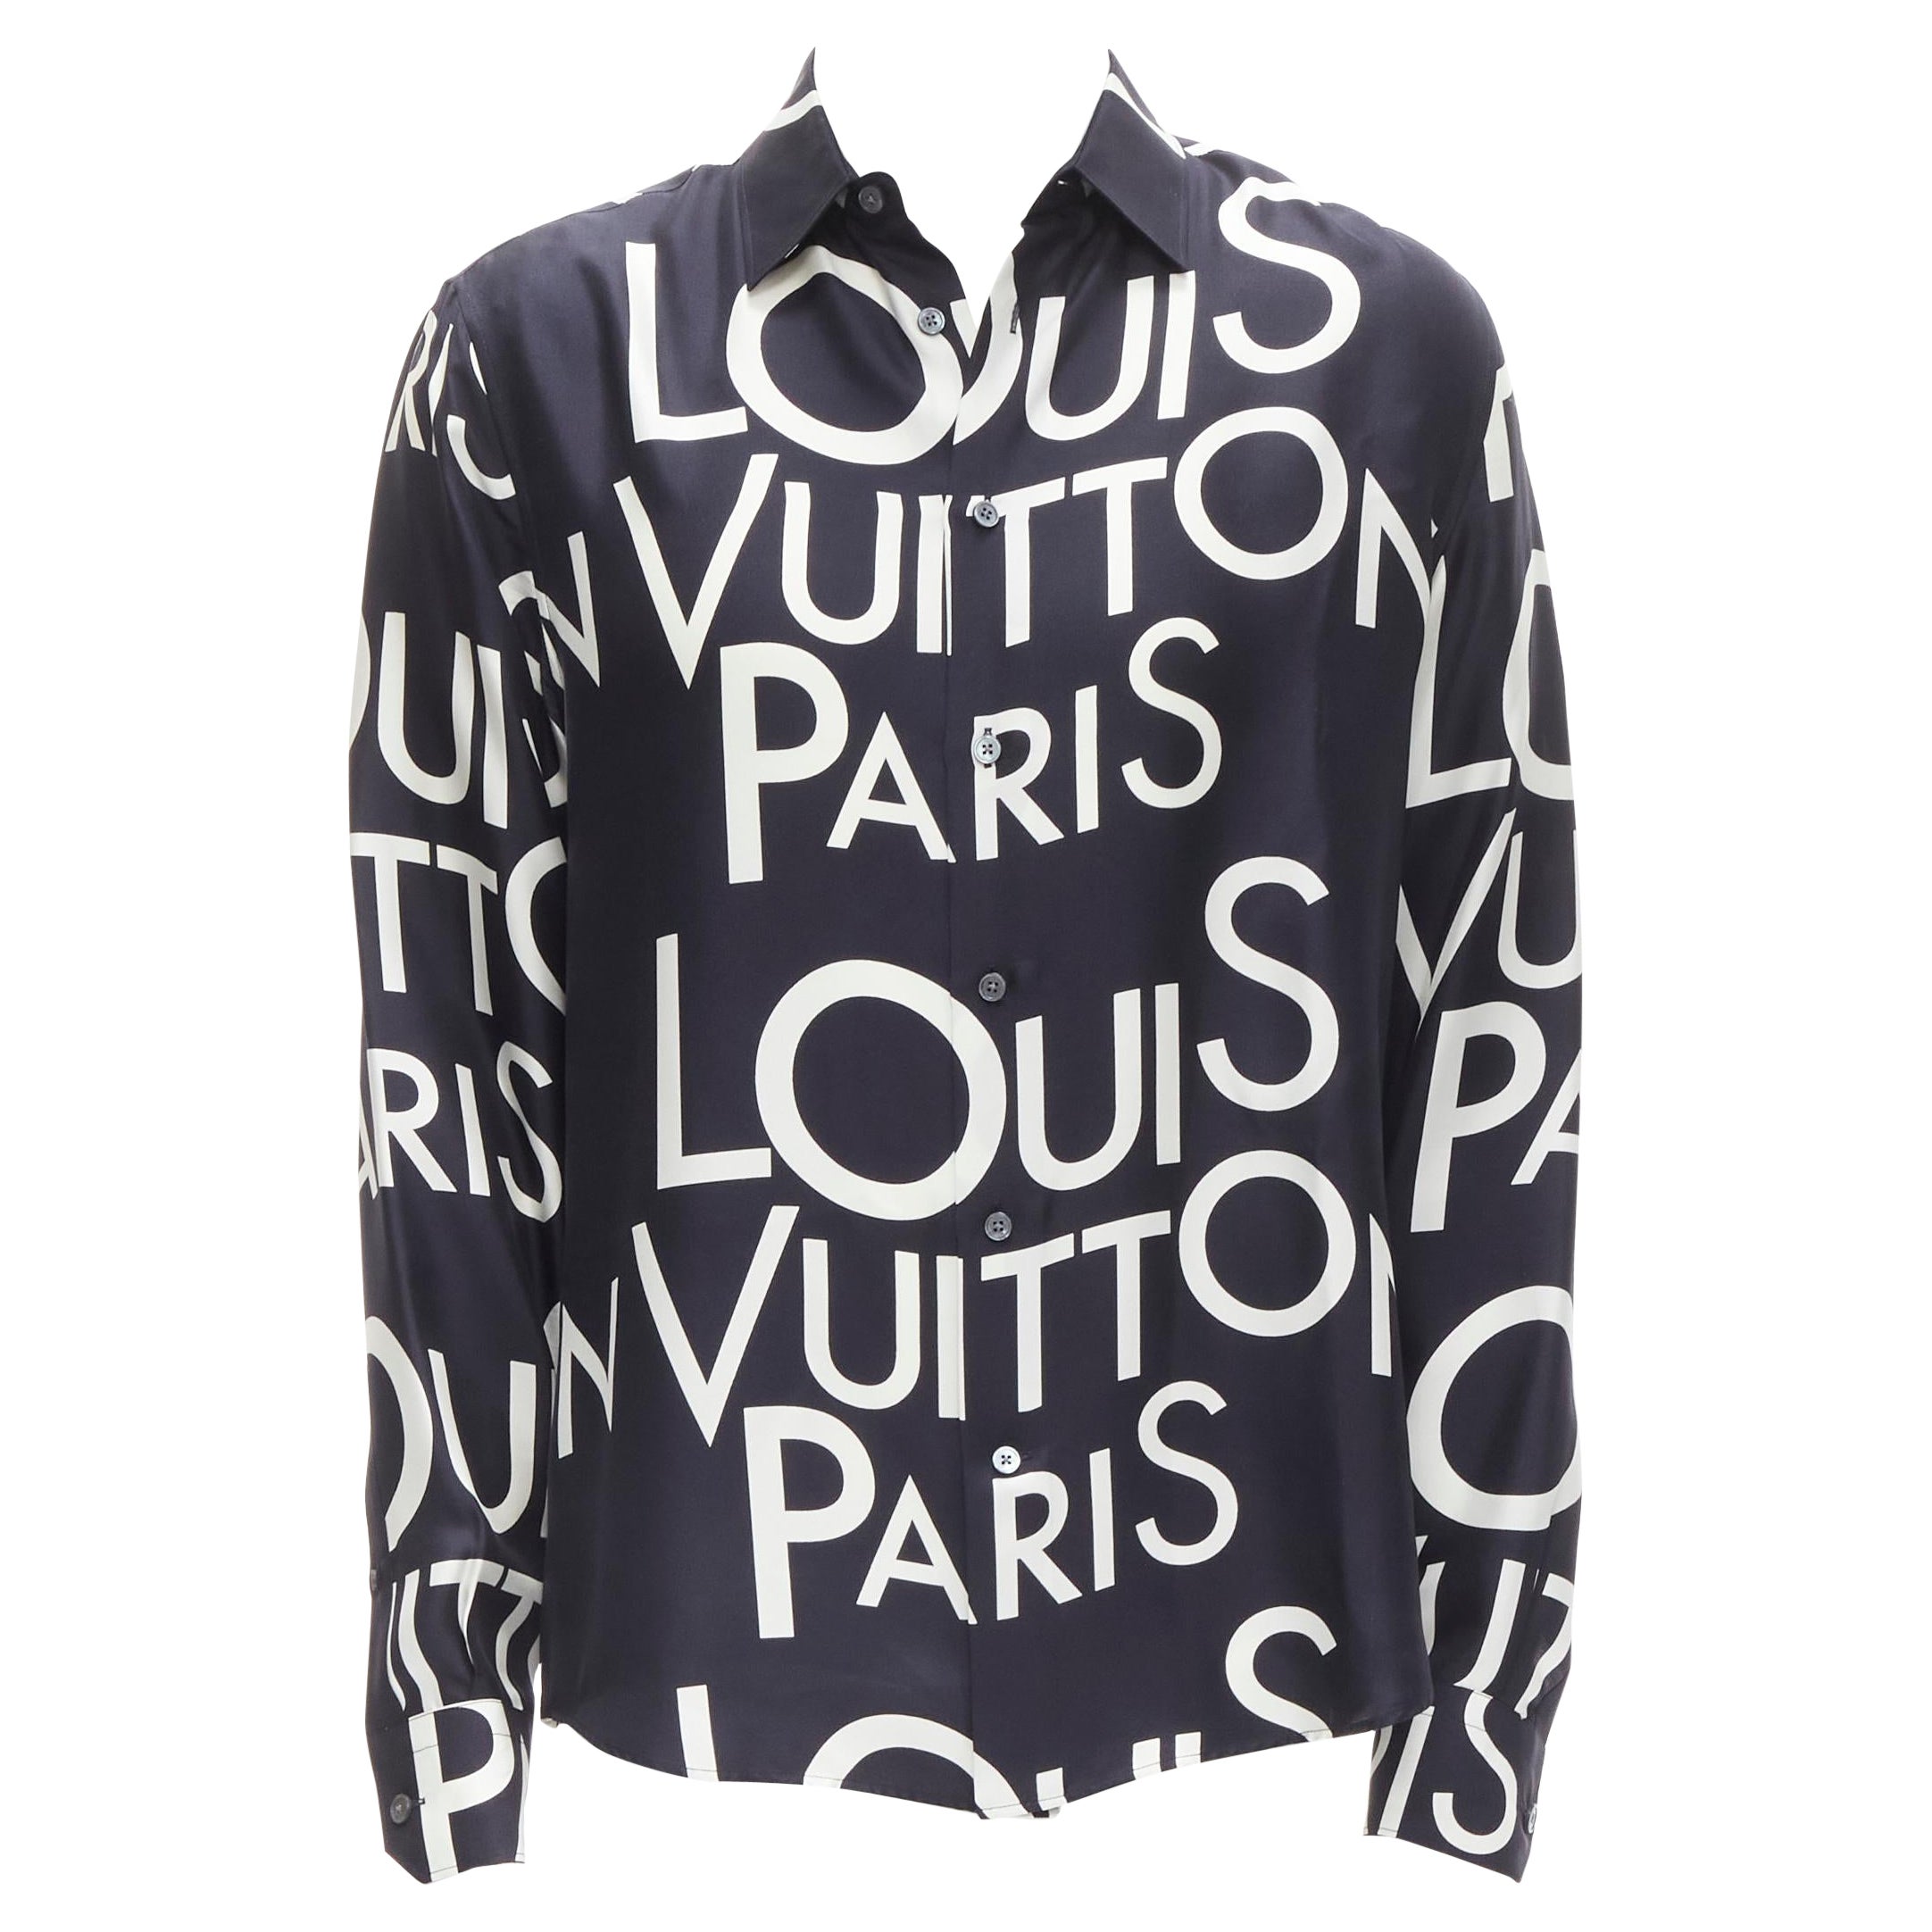 Louis Vuitton Paris Shirts - 2 For Sale on 1stDibs  louis vuitton paris  tshirt, paris louis vuitton trikot, lv made shirt